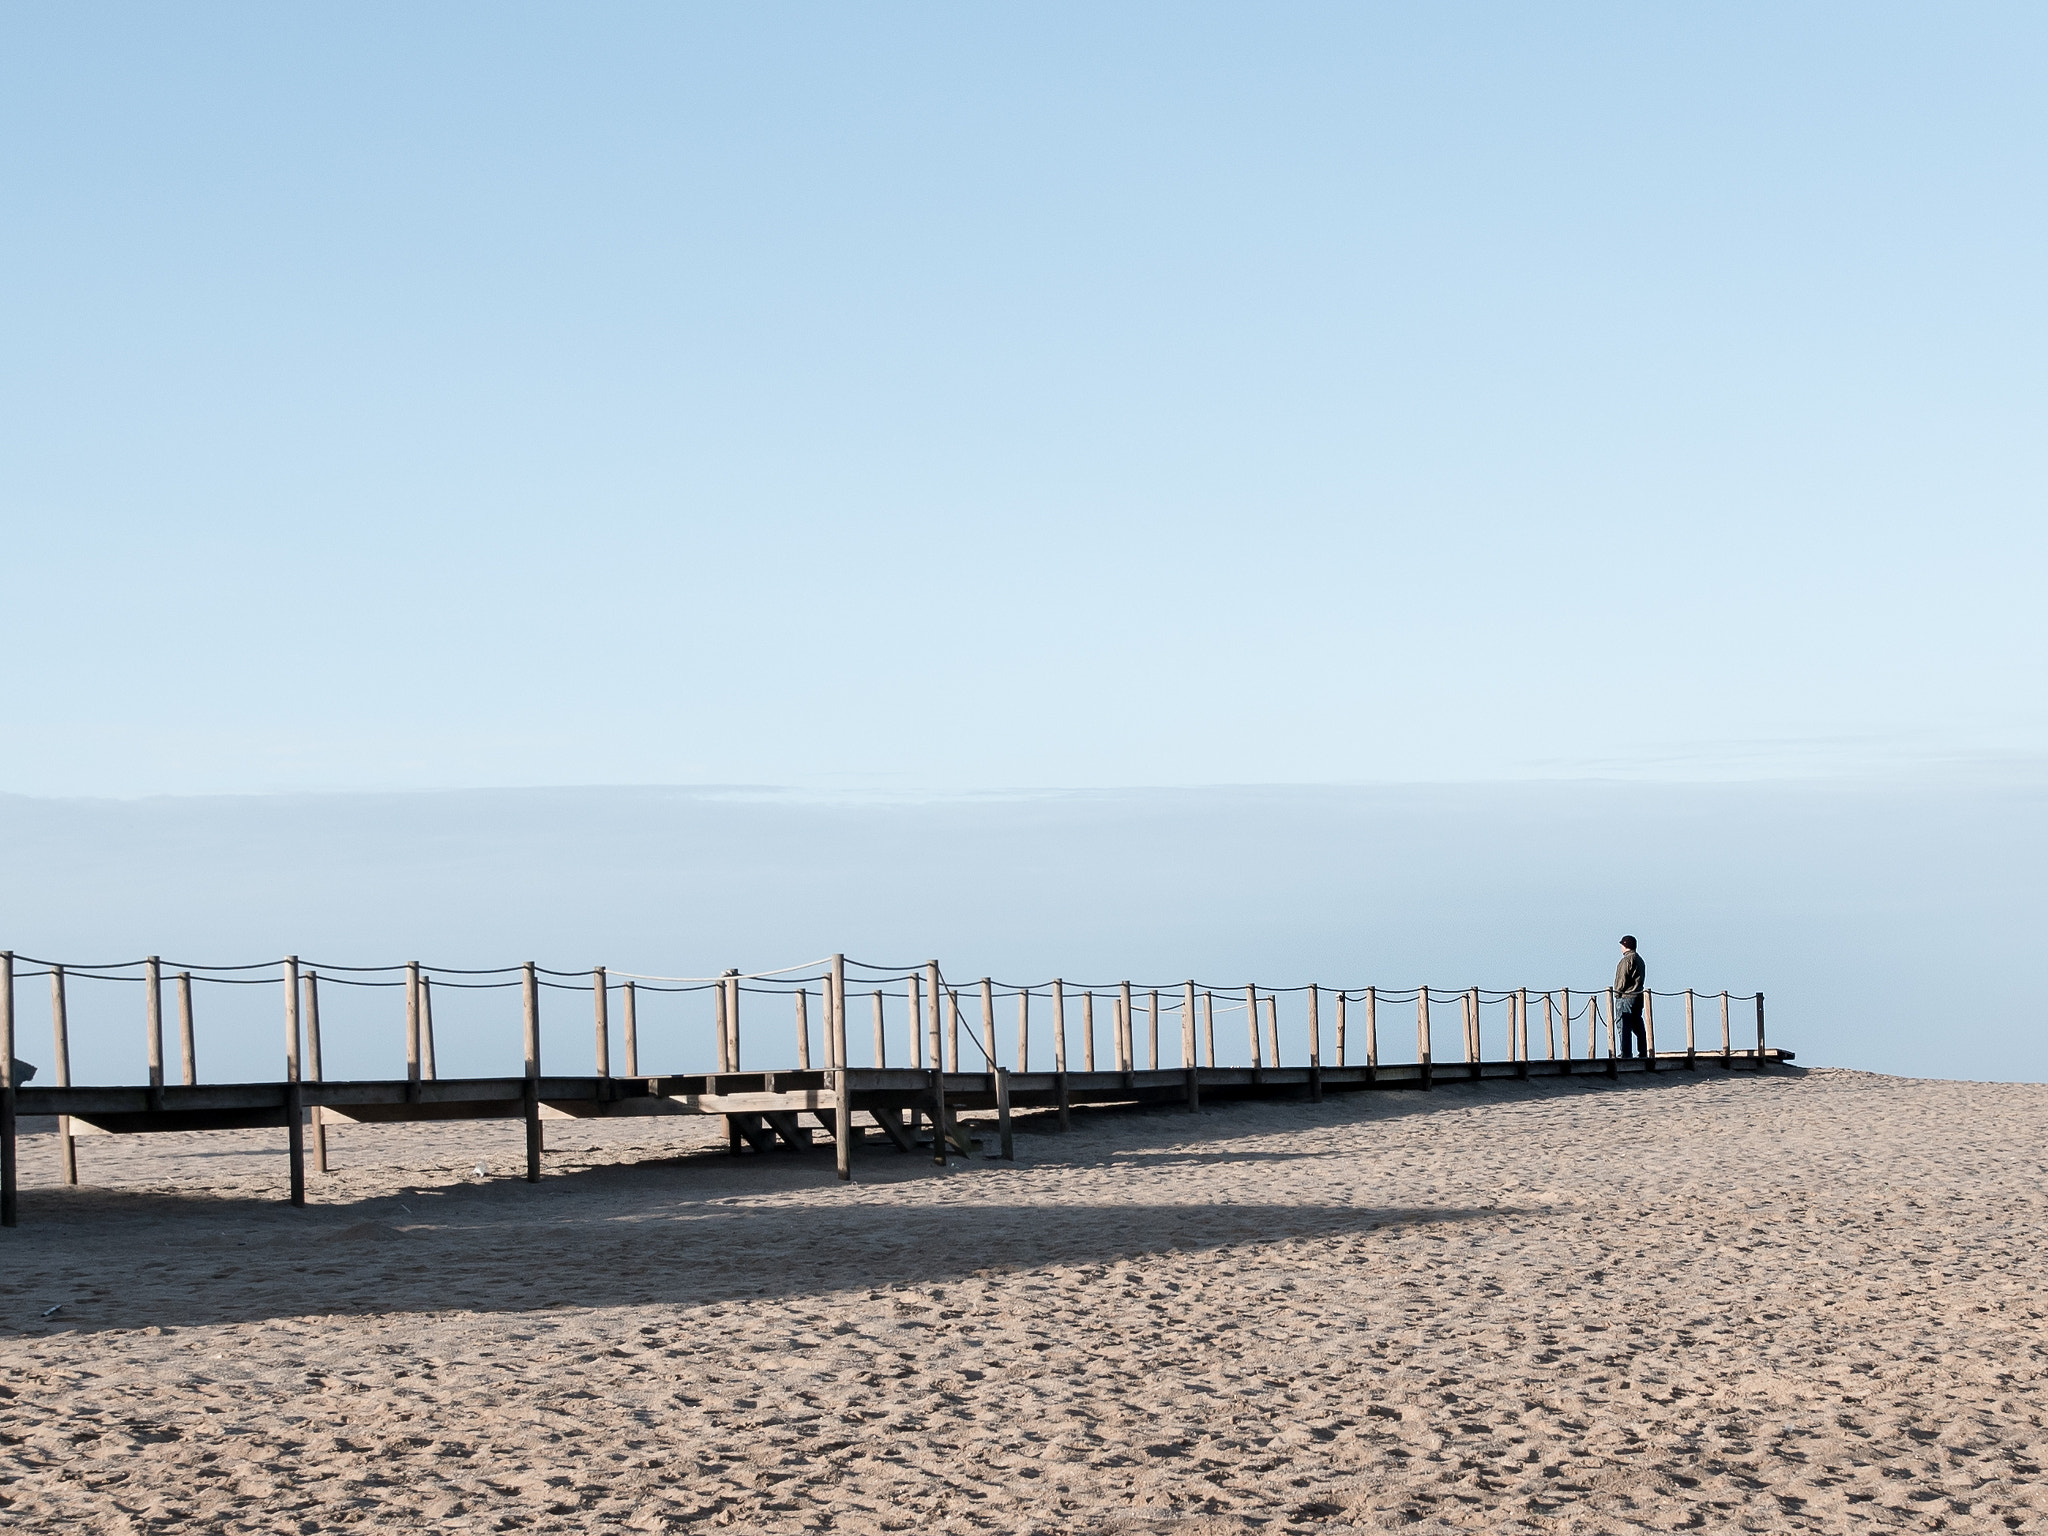 .7x Metabones 18-35/1.8 sample photo. A man on the beach pier photography